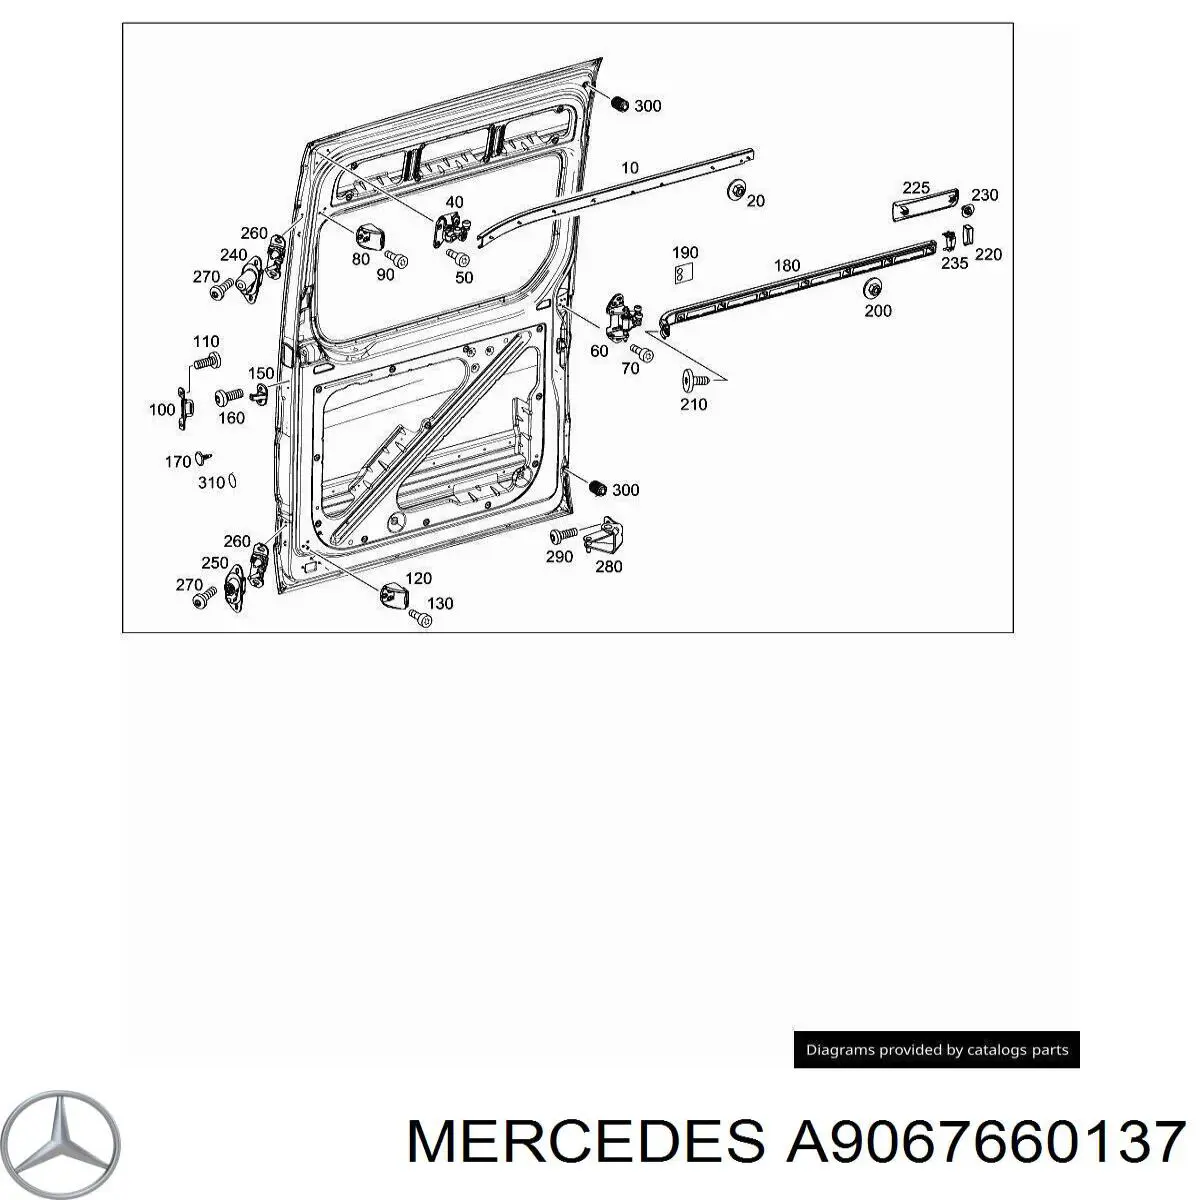 A9067660137 Mercedes carril guía de puerta corrediza, superior derecho